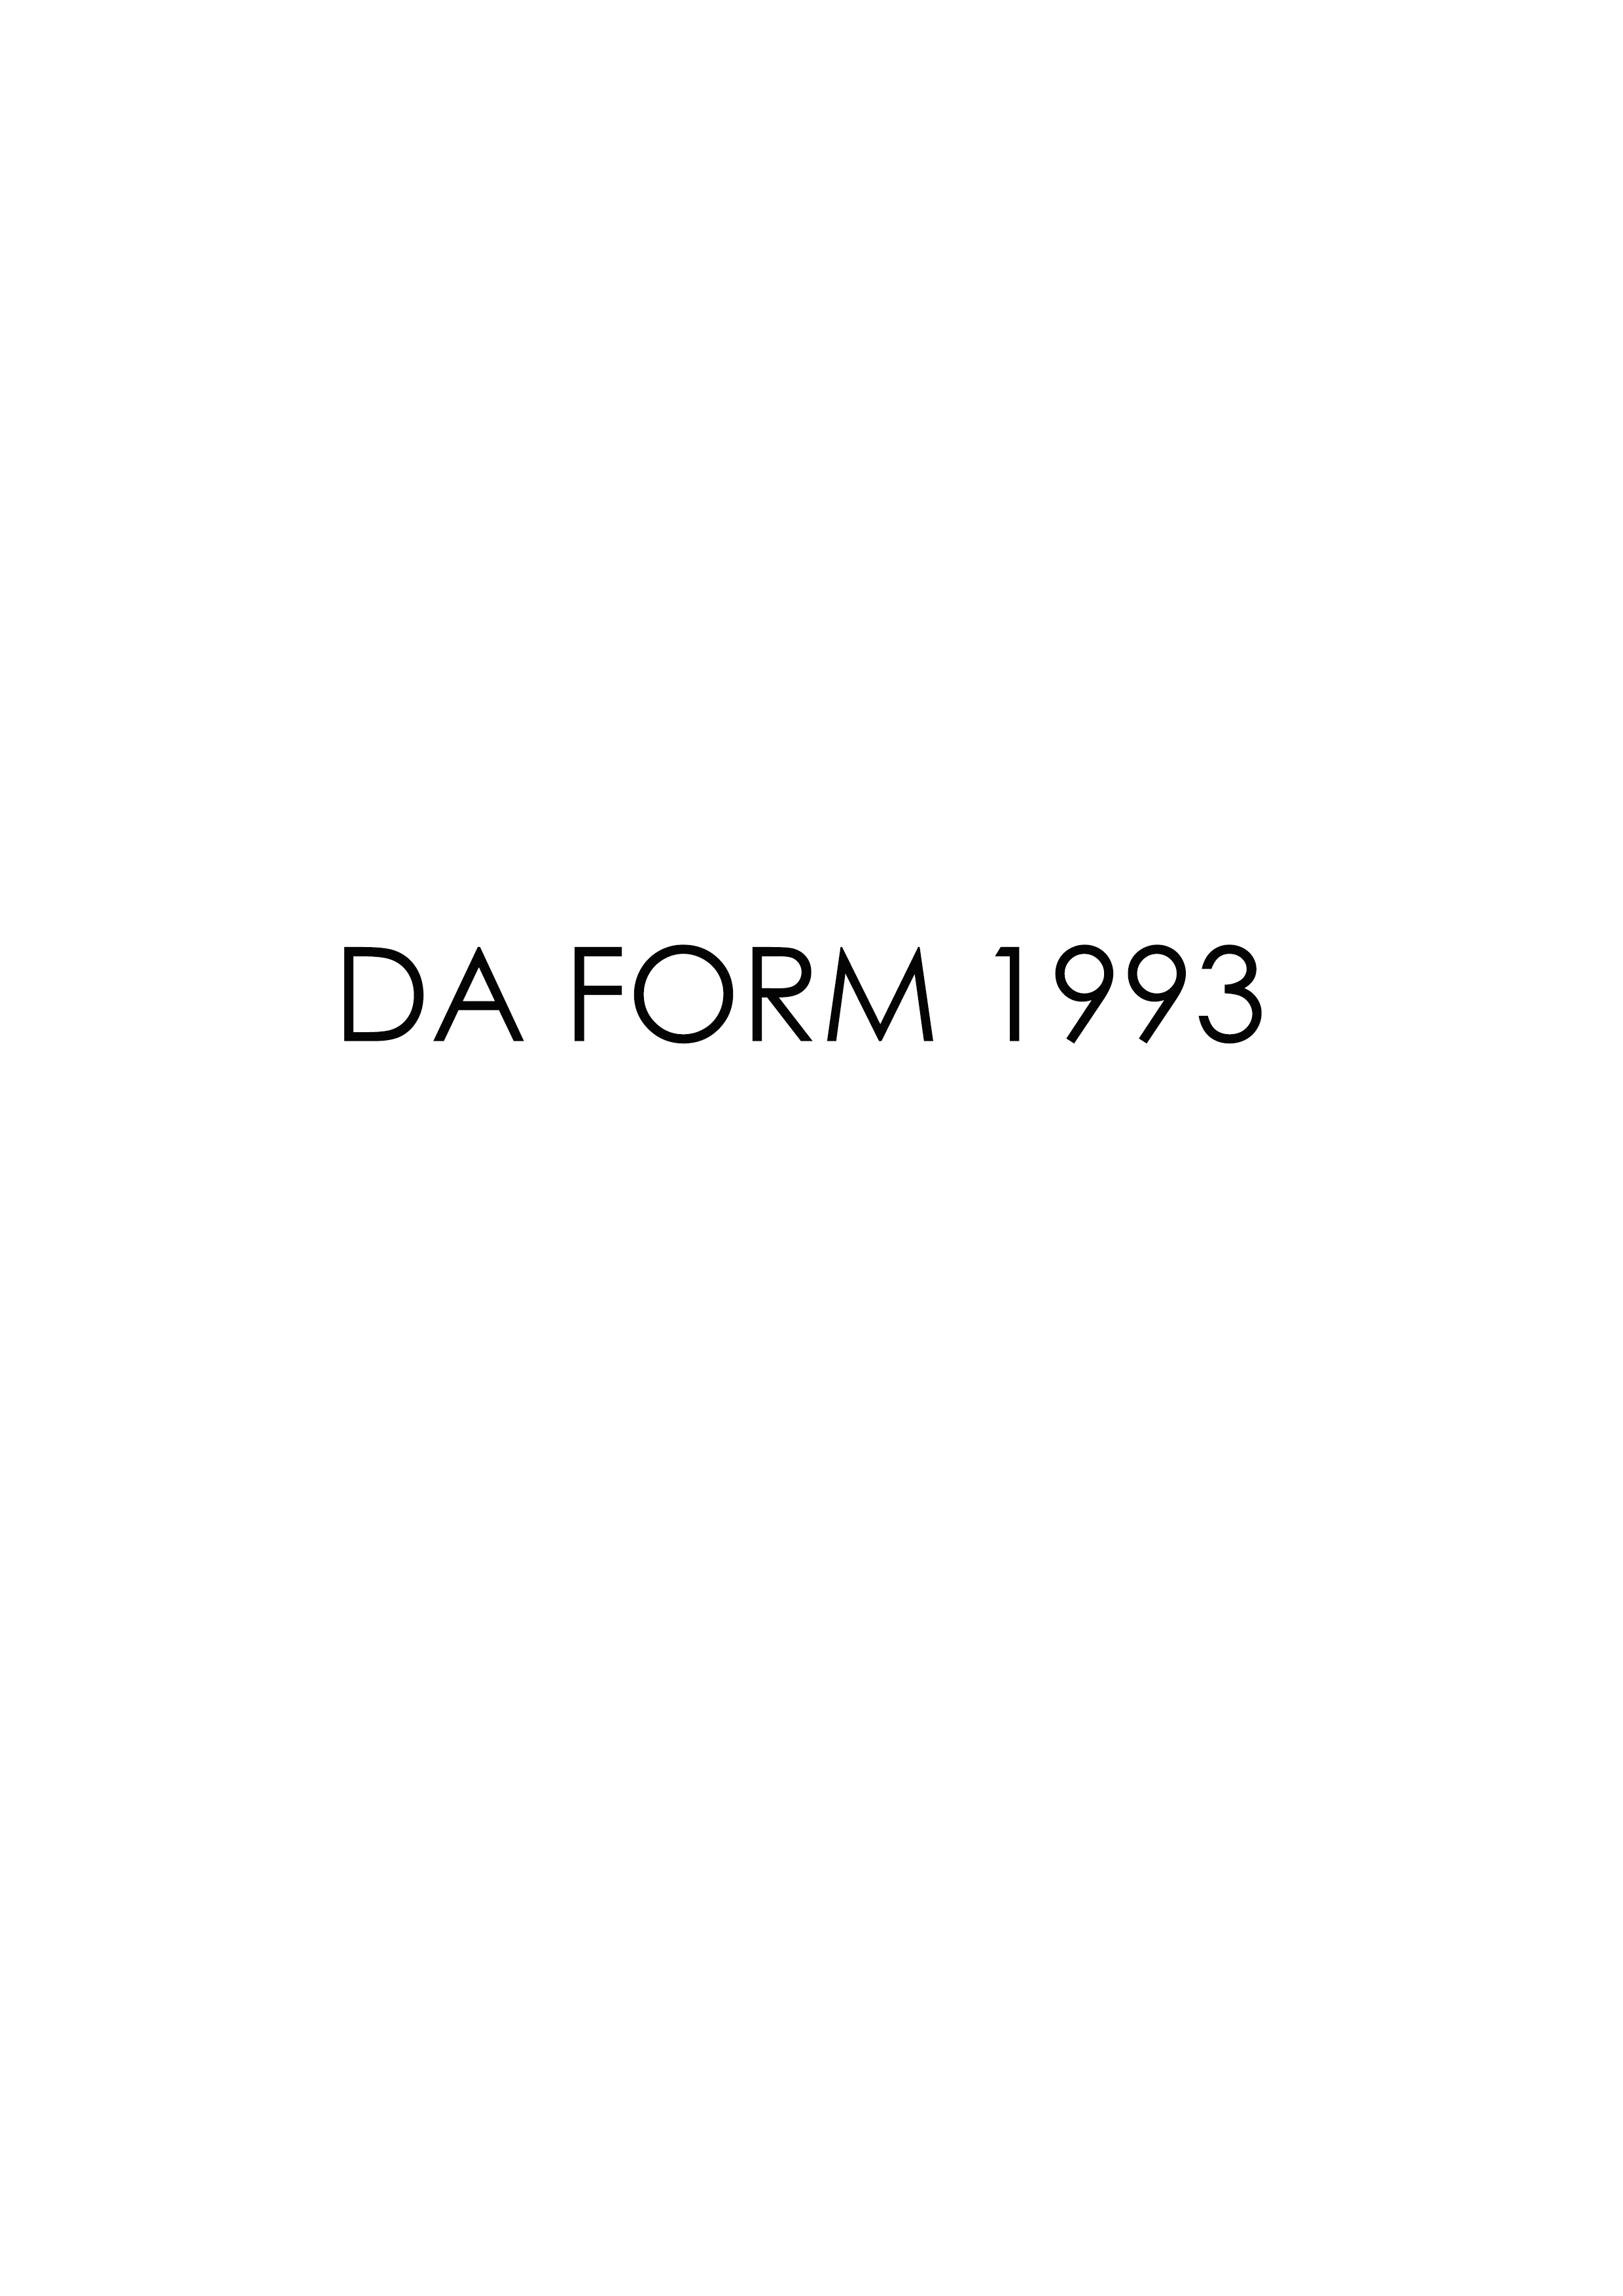 Download da 1993 Form Free